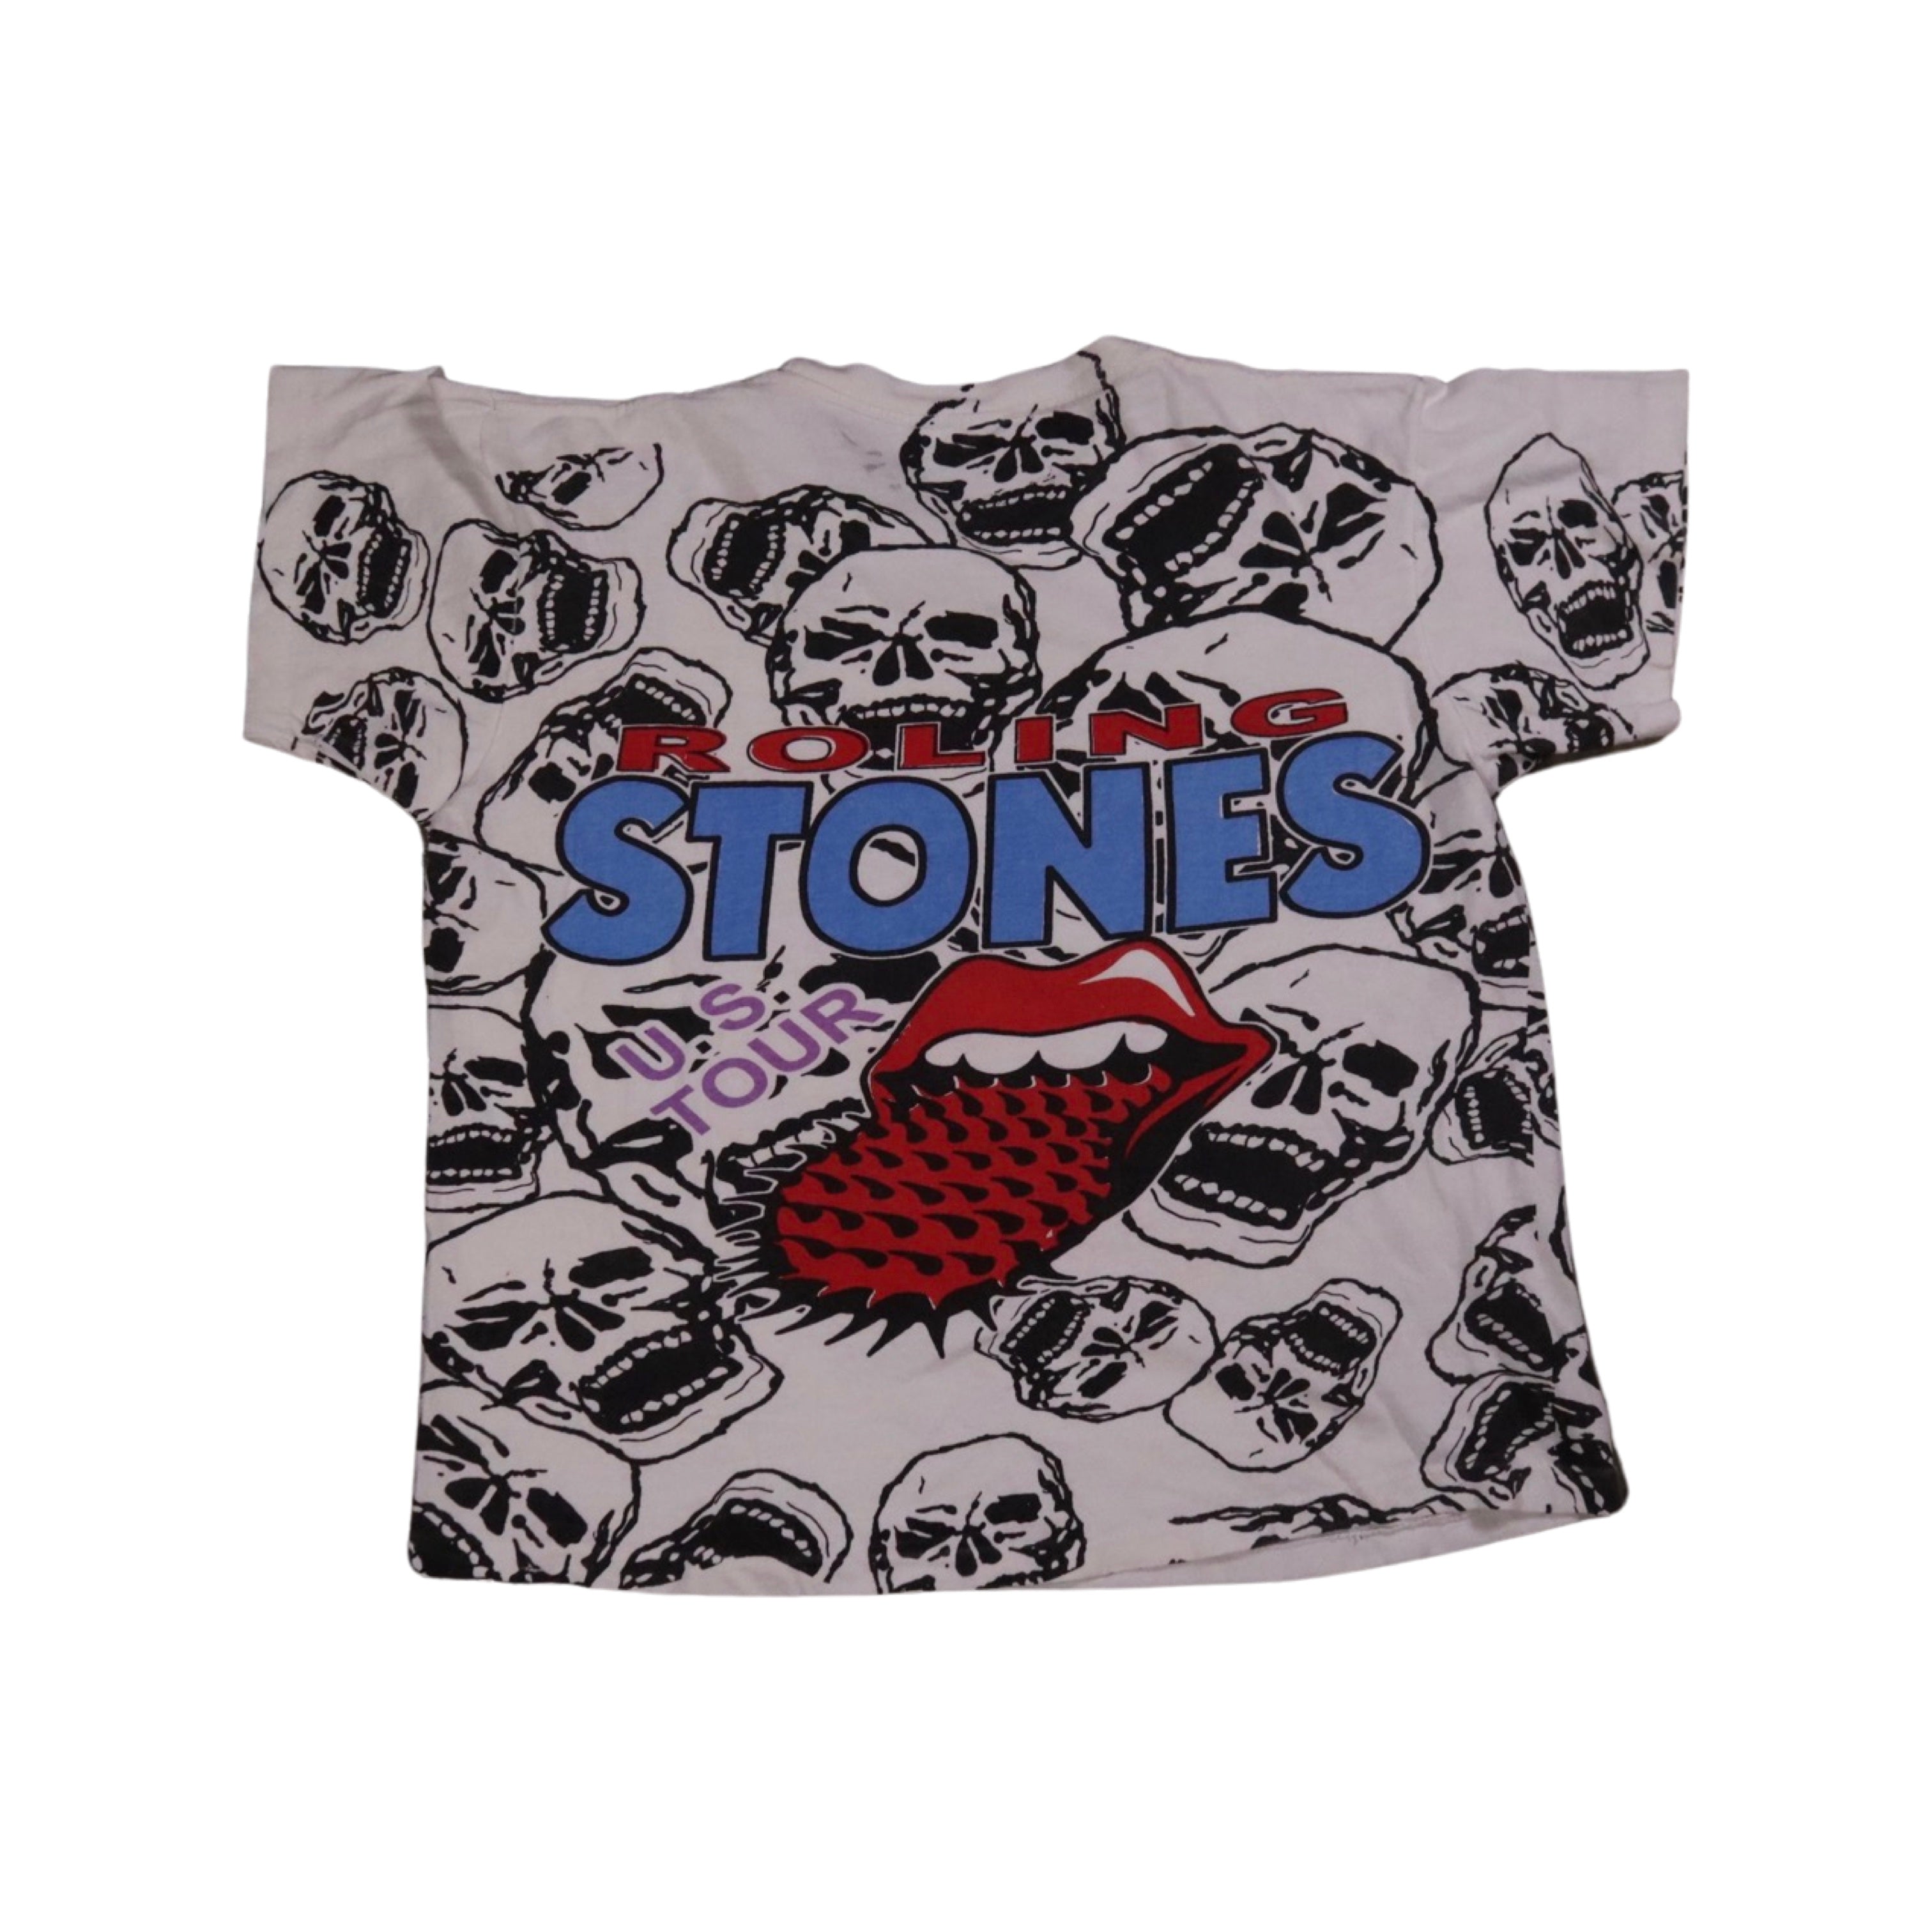 Rolling Stones All-Over-Print Skull 90s T-Shirt Grail (Medium)